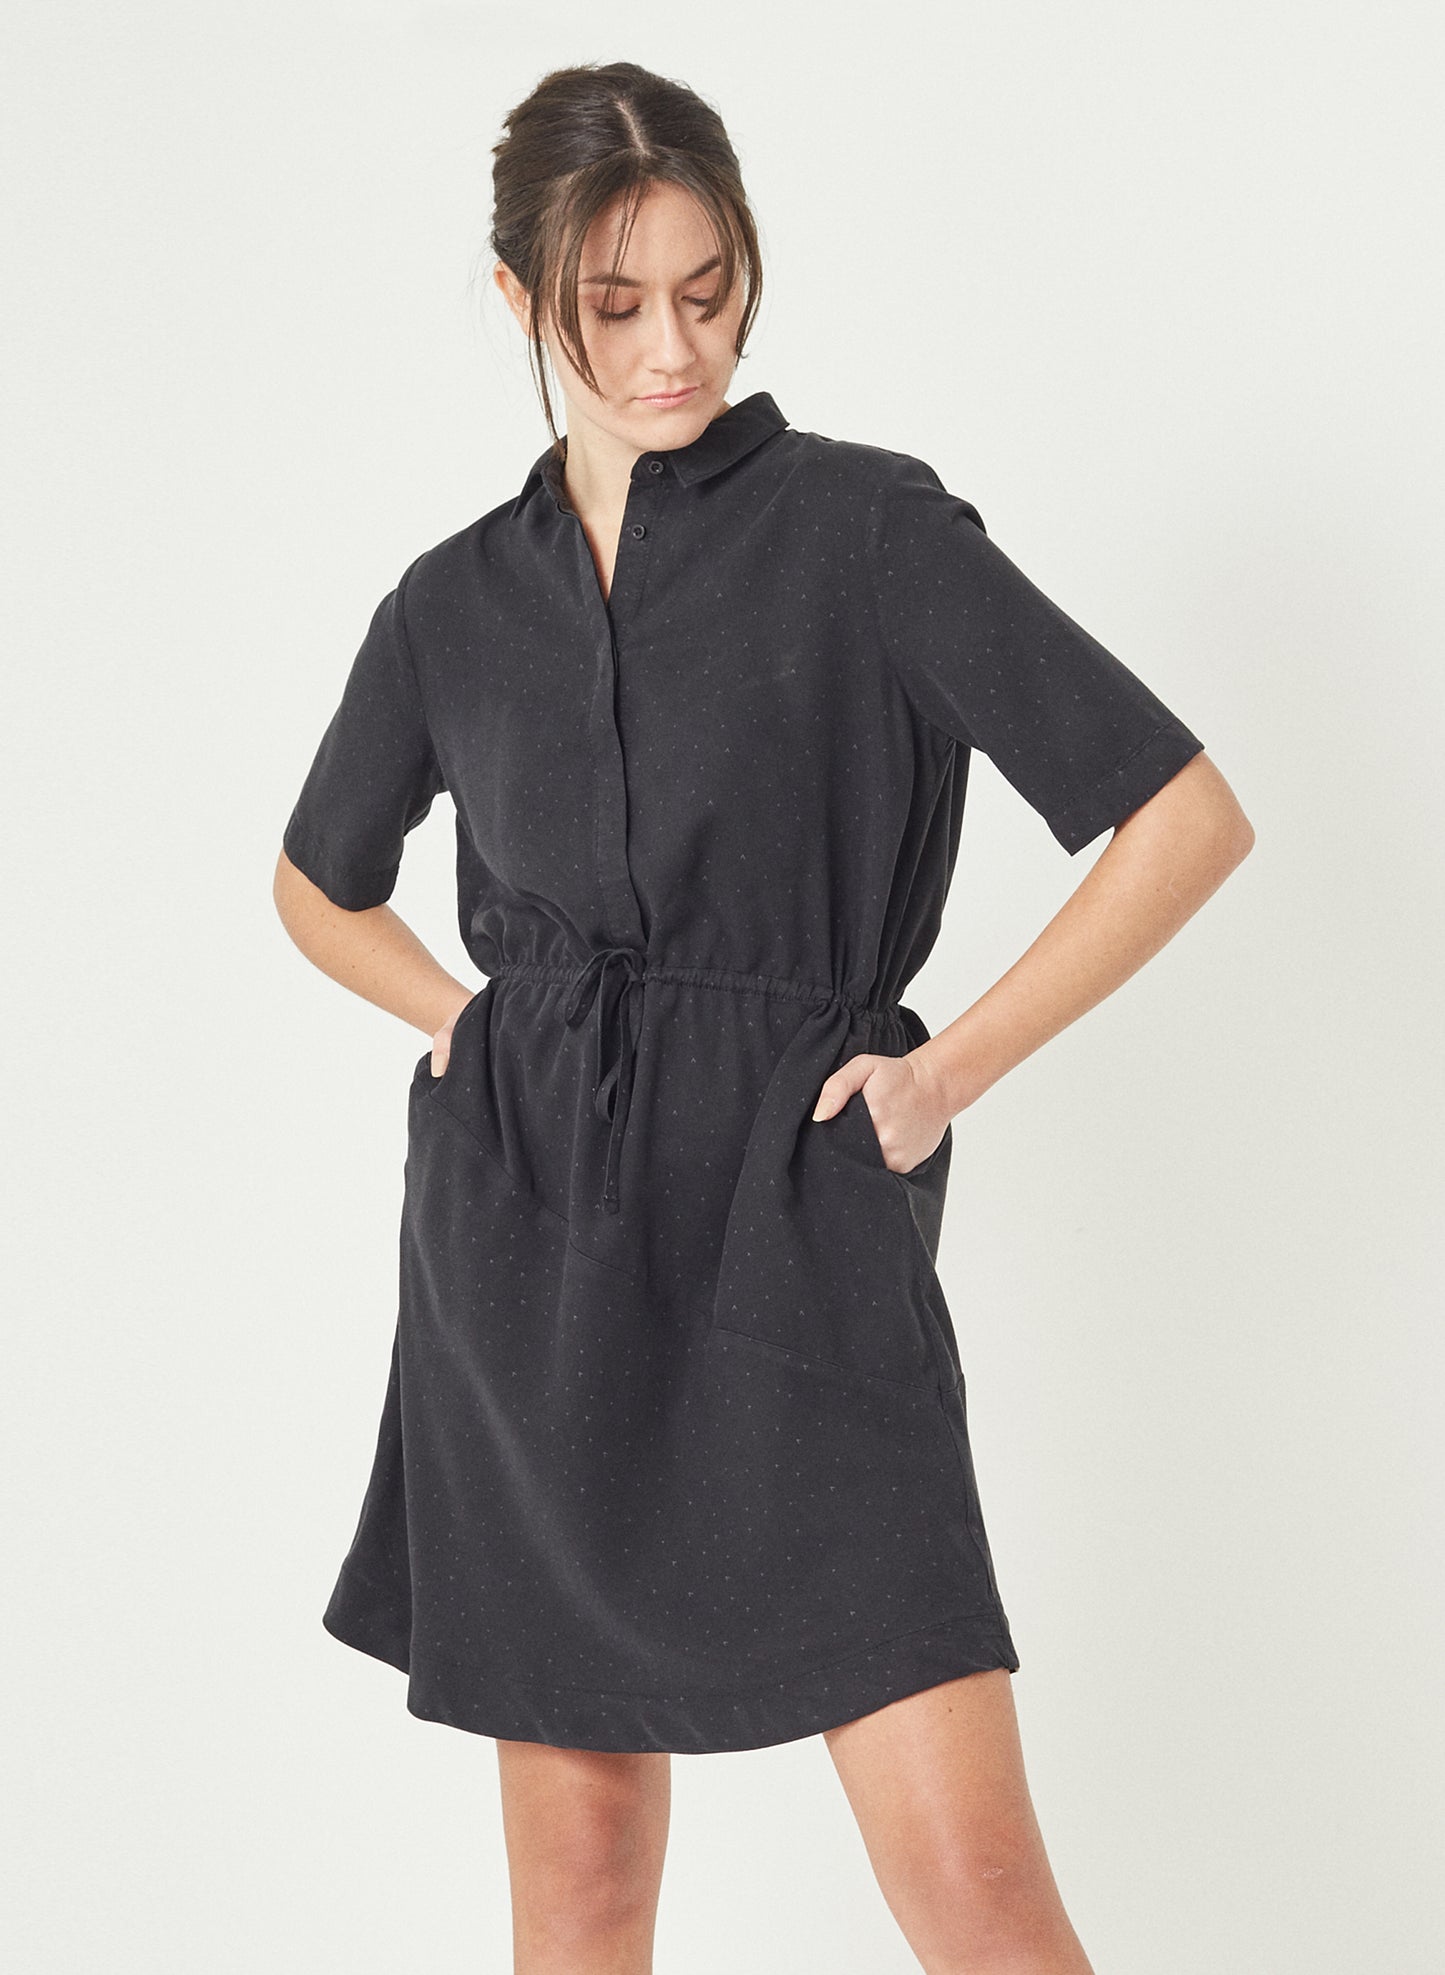 ISABELLA - Tencel™ Allover Printed Dress - Black